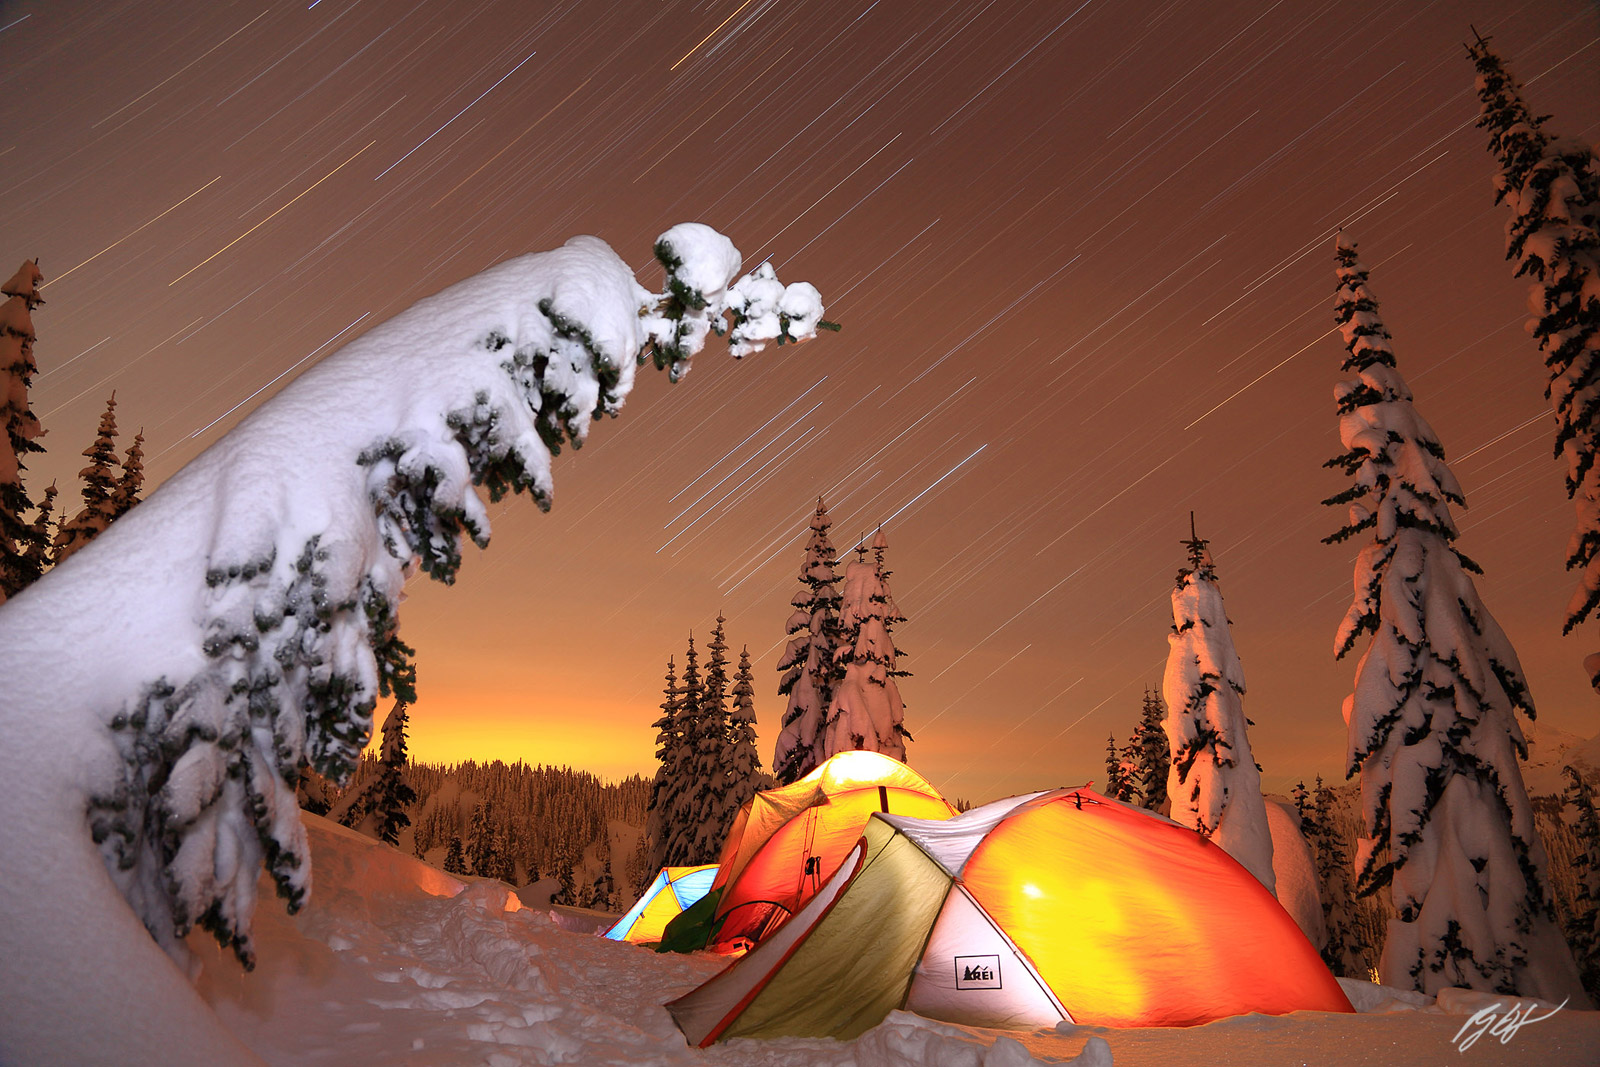 Star Trails and Winter Camp, Mt Rainer National Park Washington